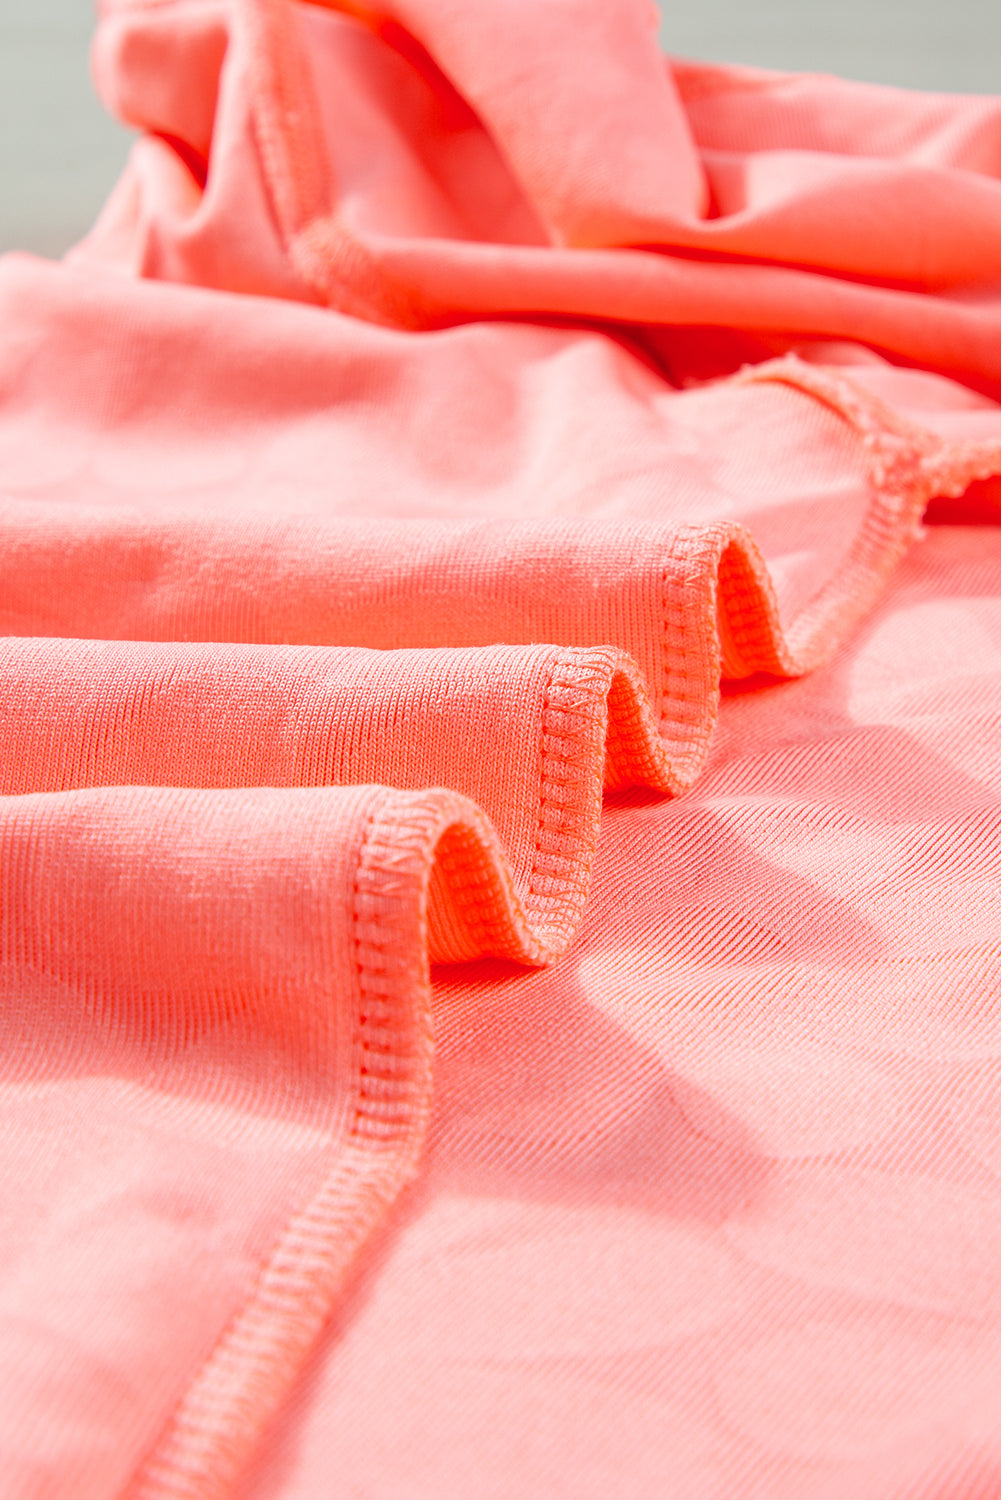 Grapefruit Orange Floral Textured Short Sleeve Top and Shorts Lounge Set